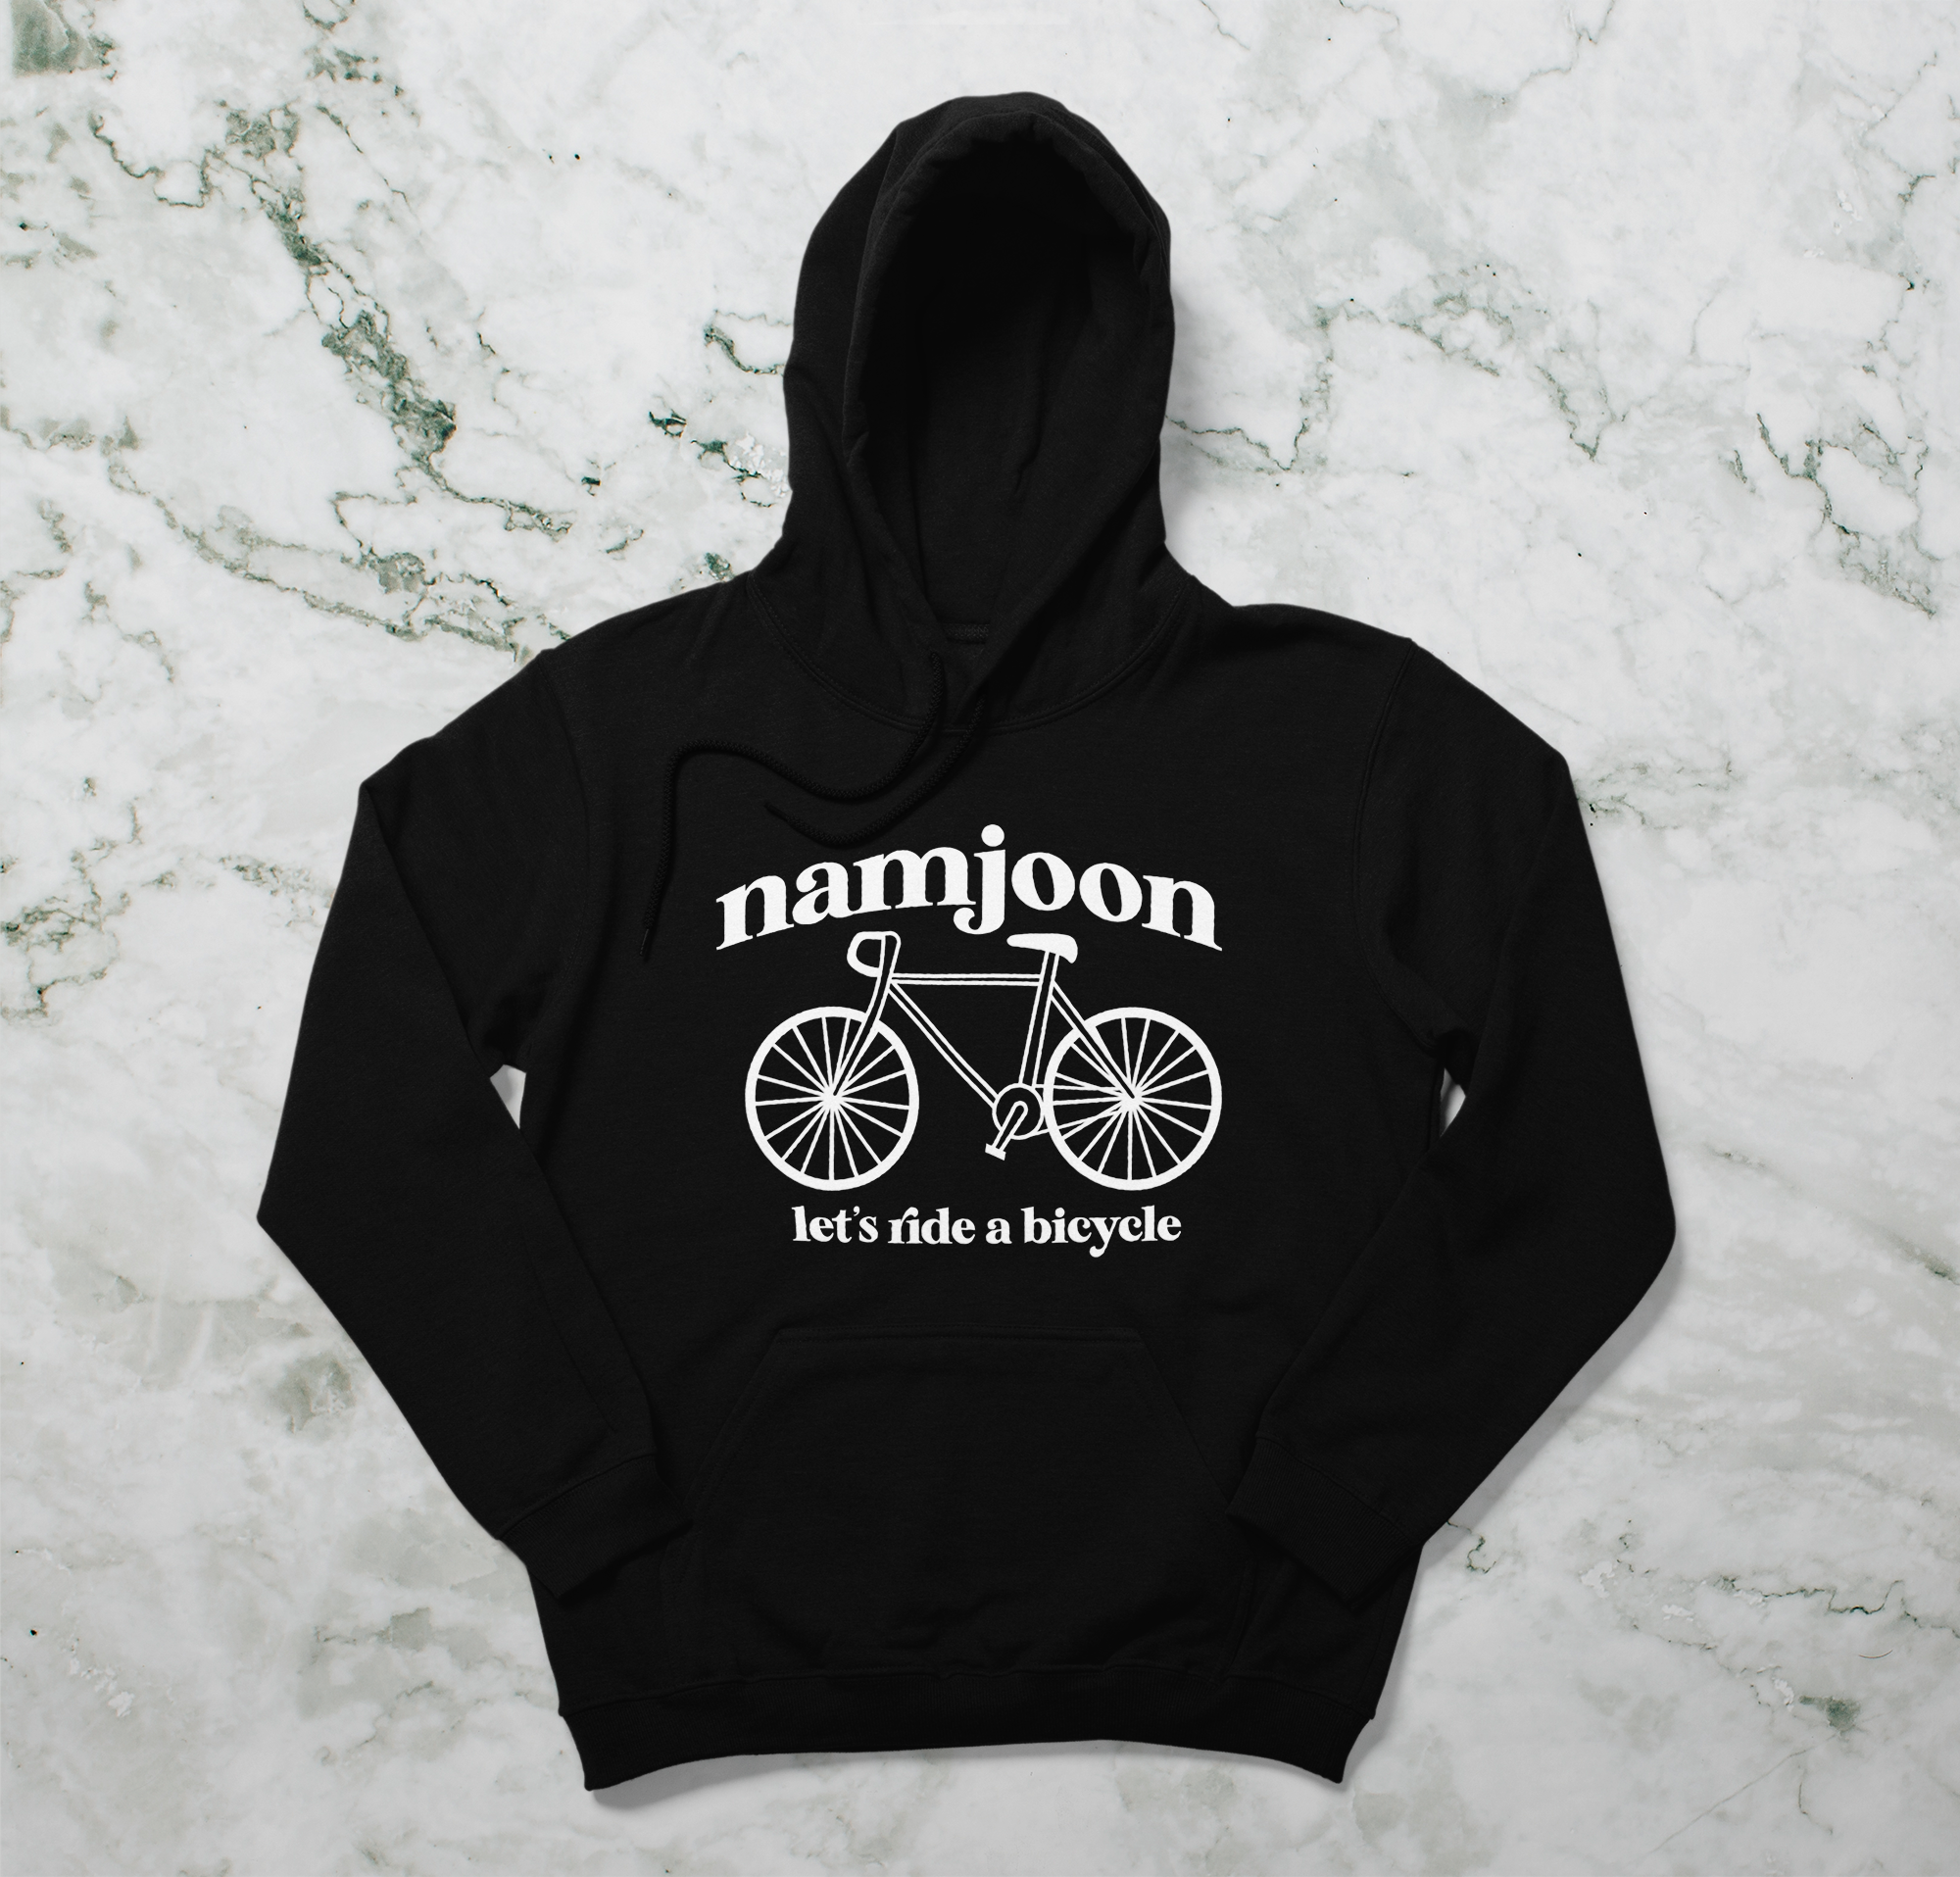 Namjoon Bicycle Shirts and Hoodies